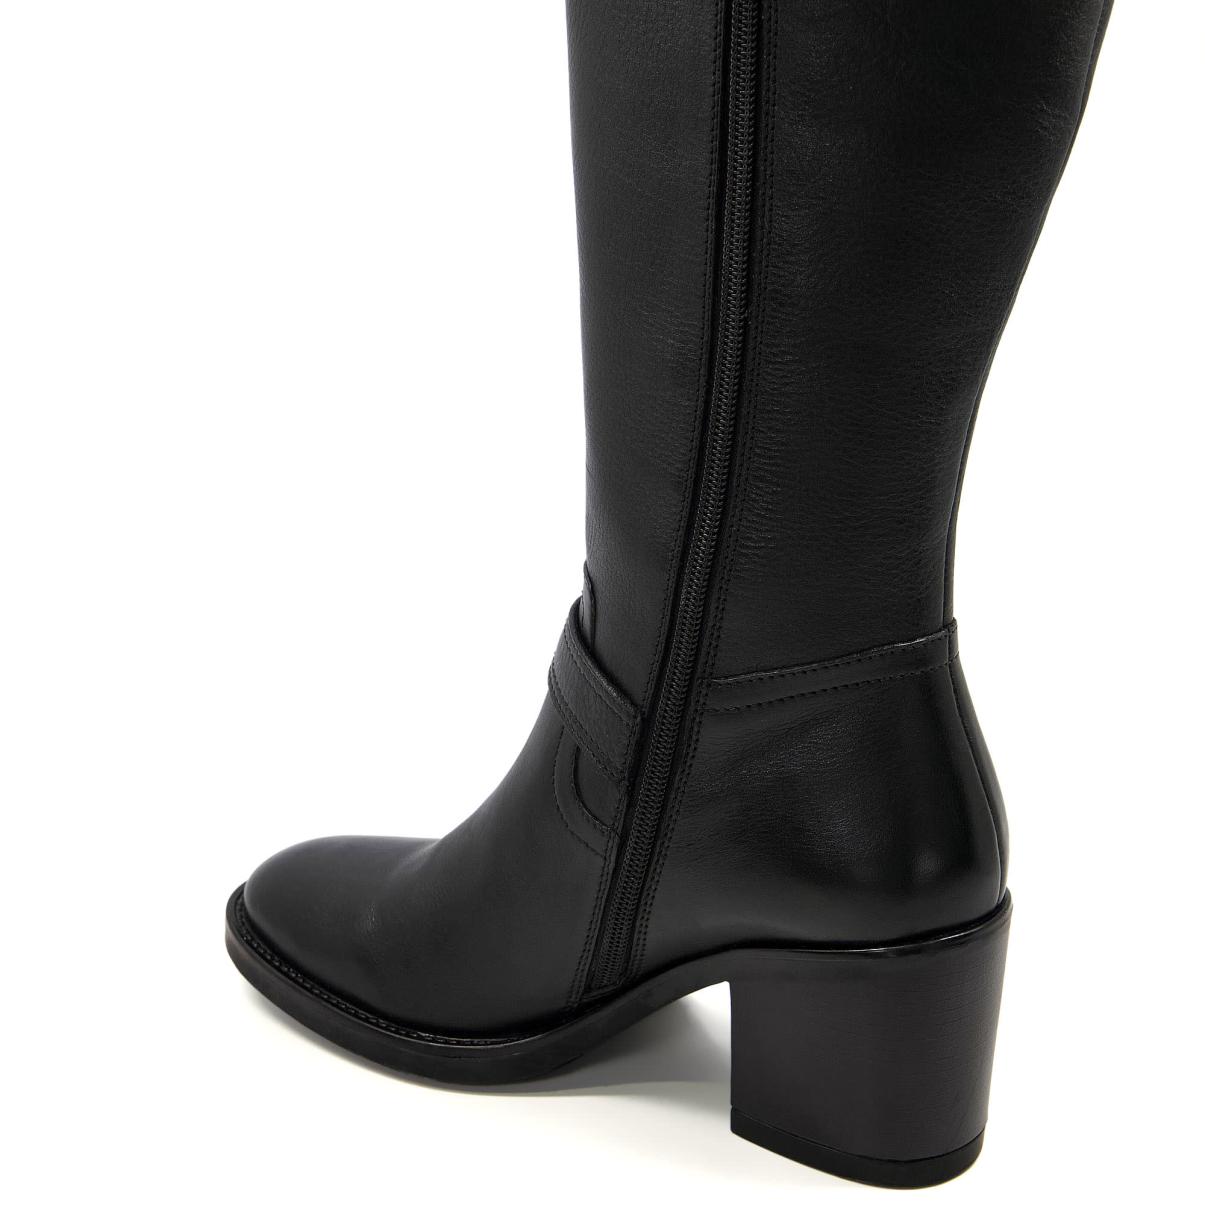 Knee High Boots Trelise - Black Dune London Women - 4